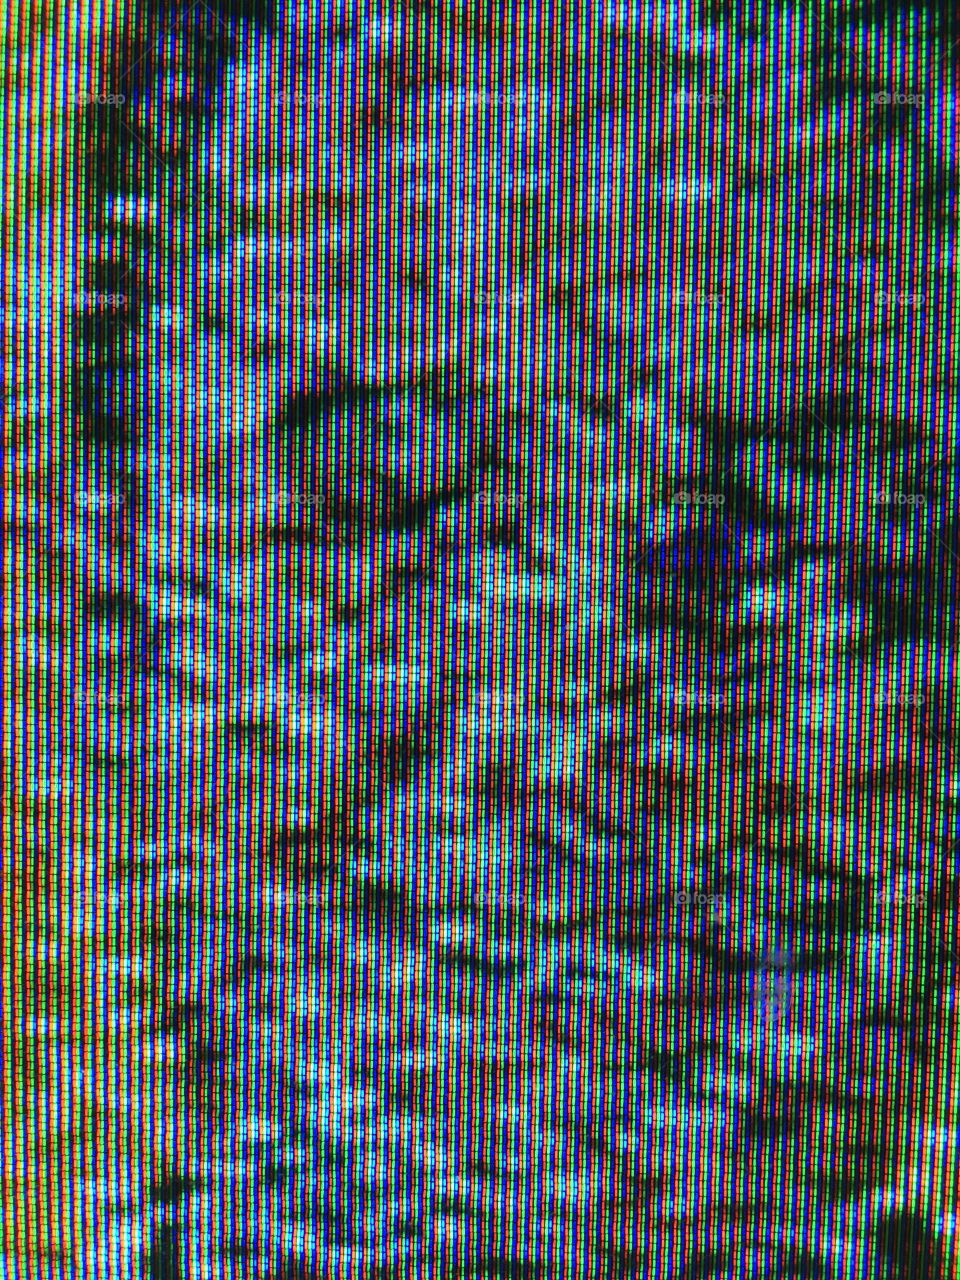 CRT TV RGB Tube pixels.